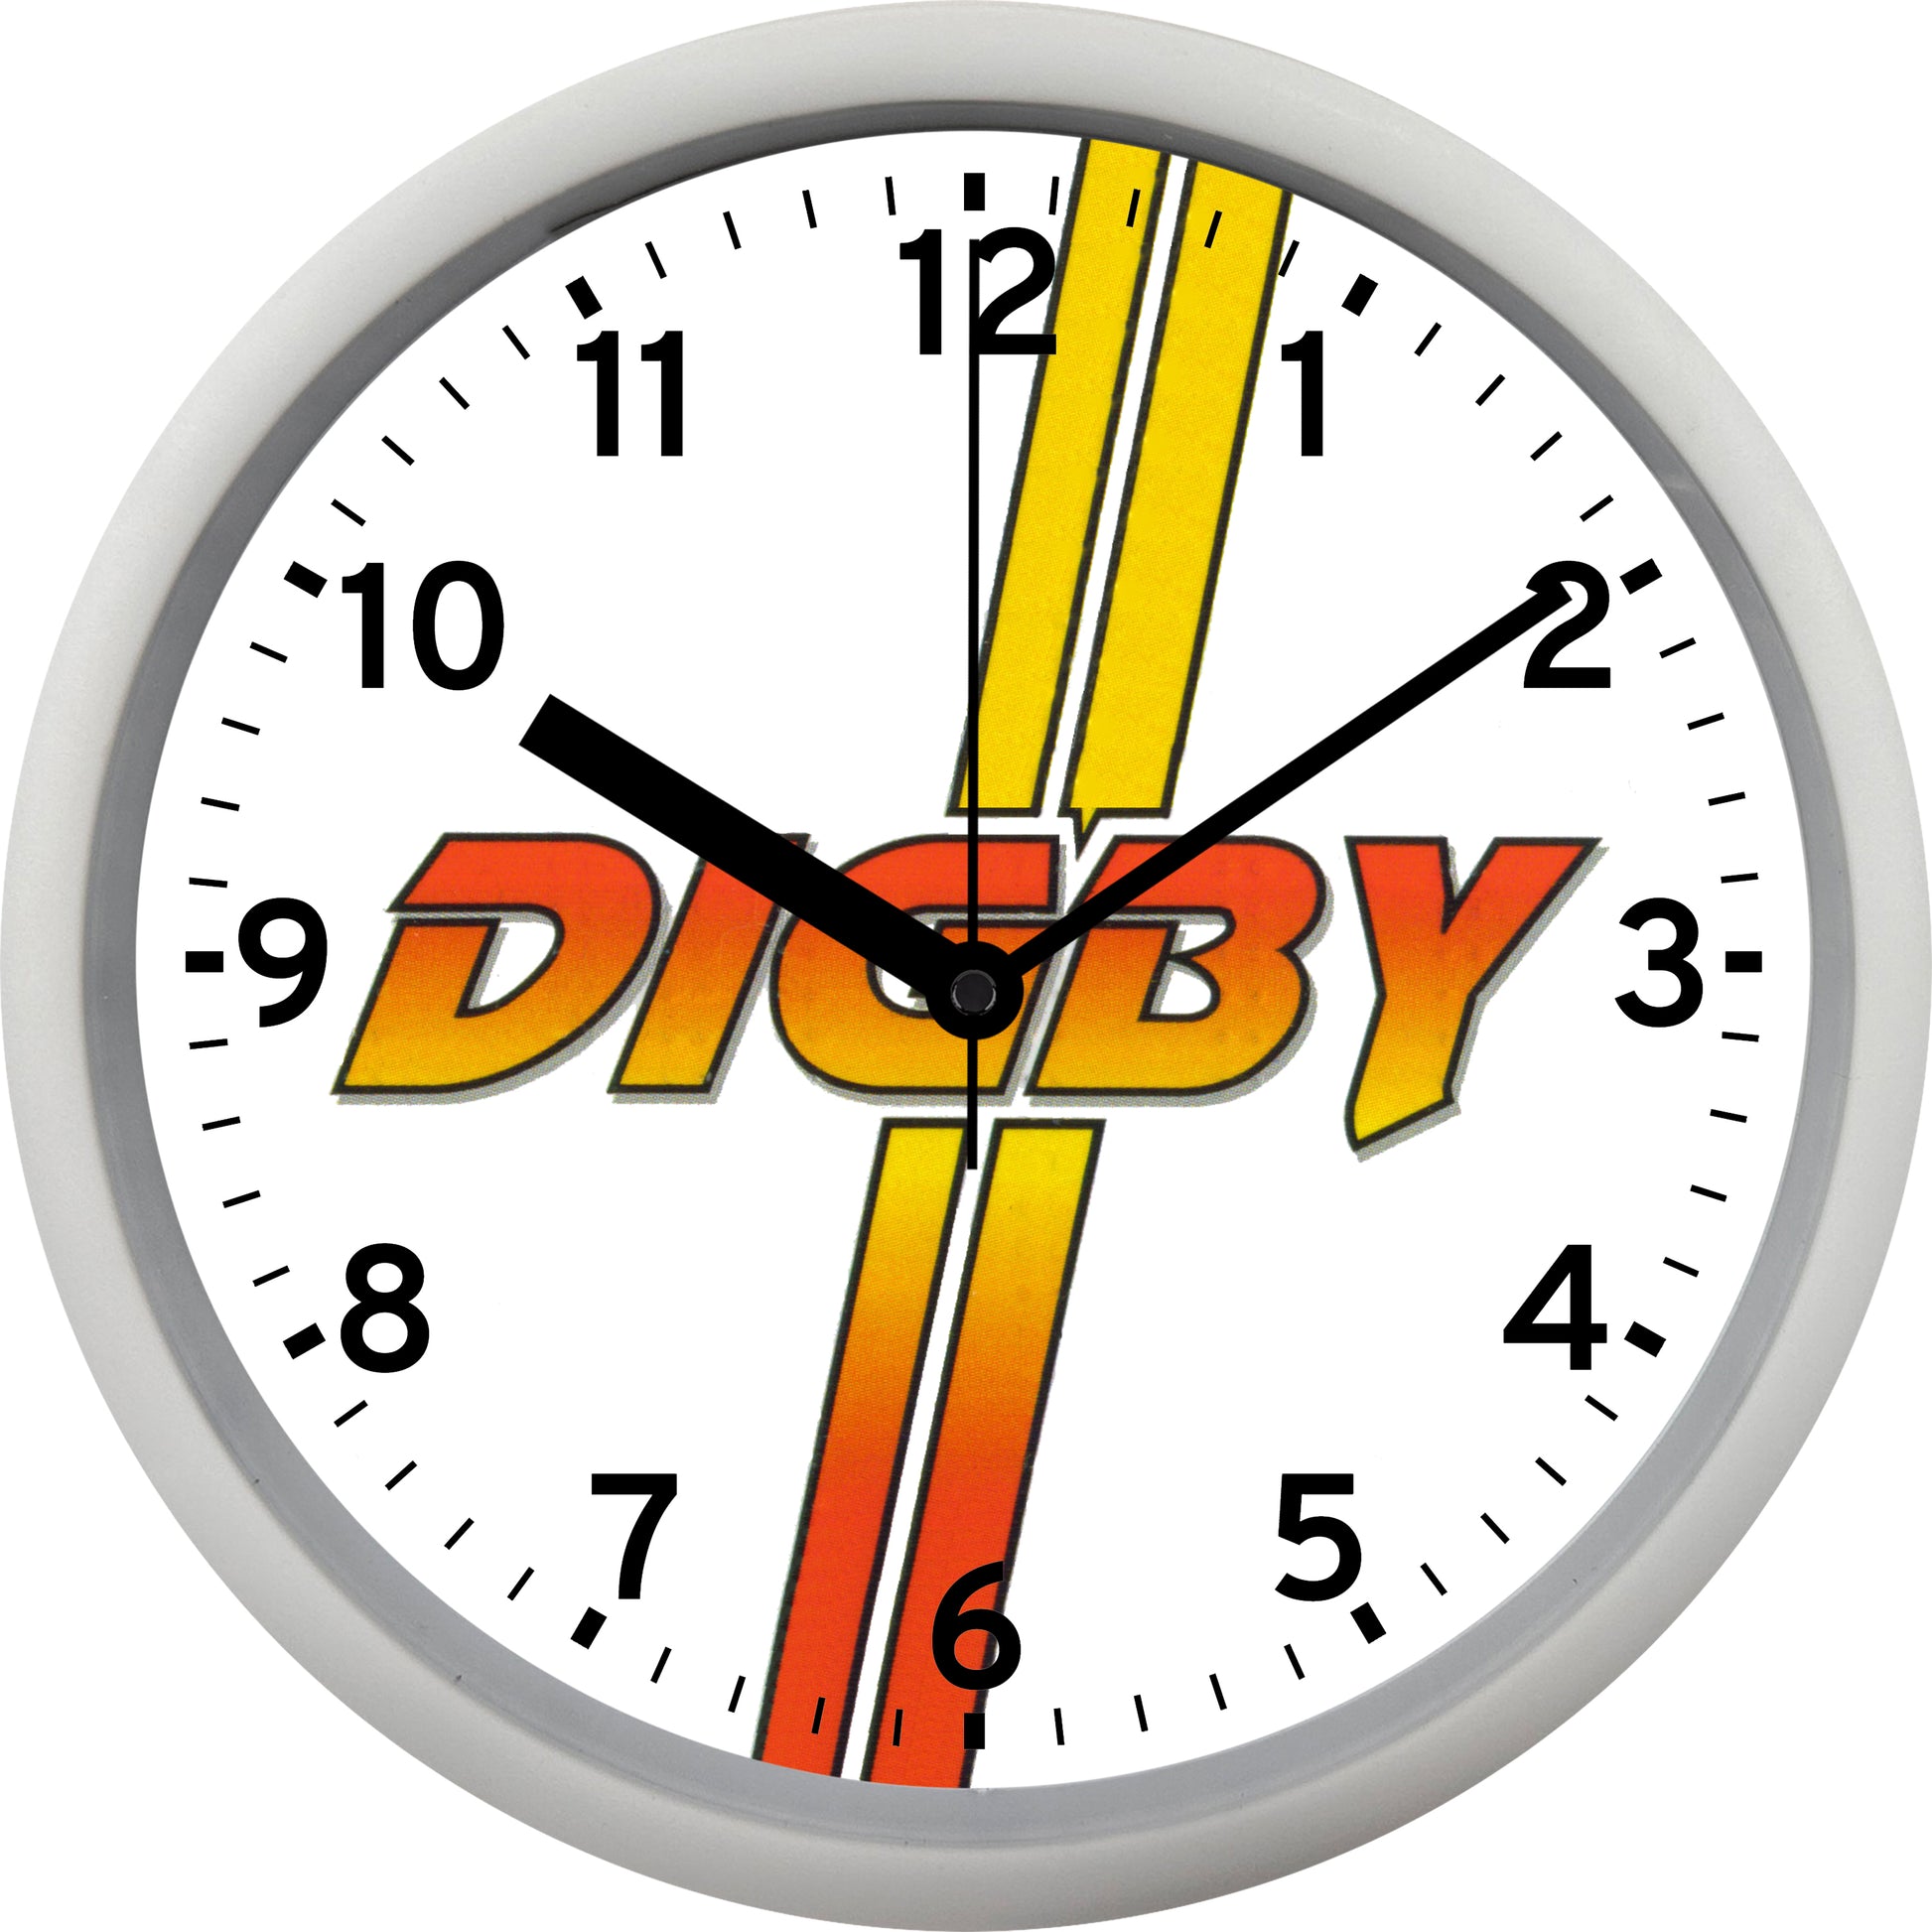 Digby Refrigerated Express, Inc. Wall Clock